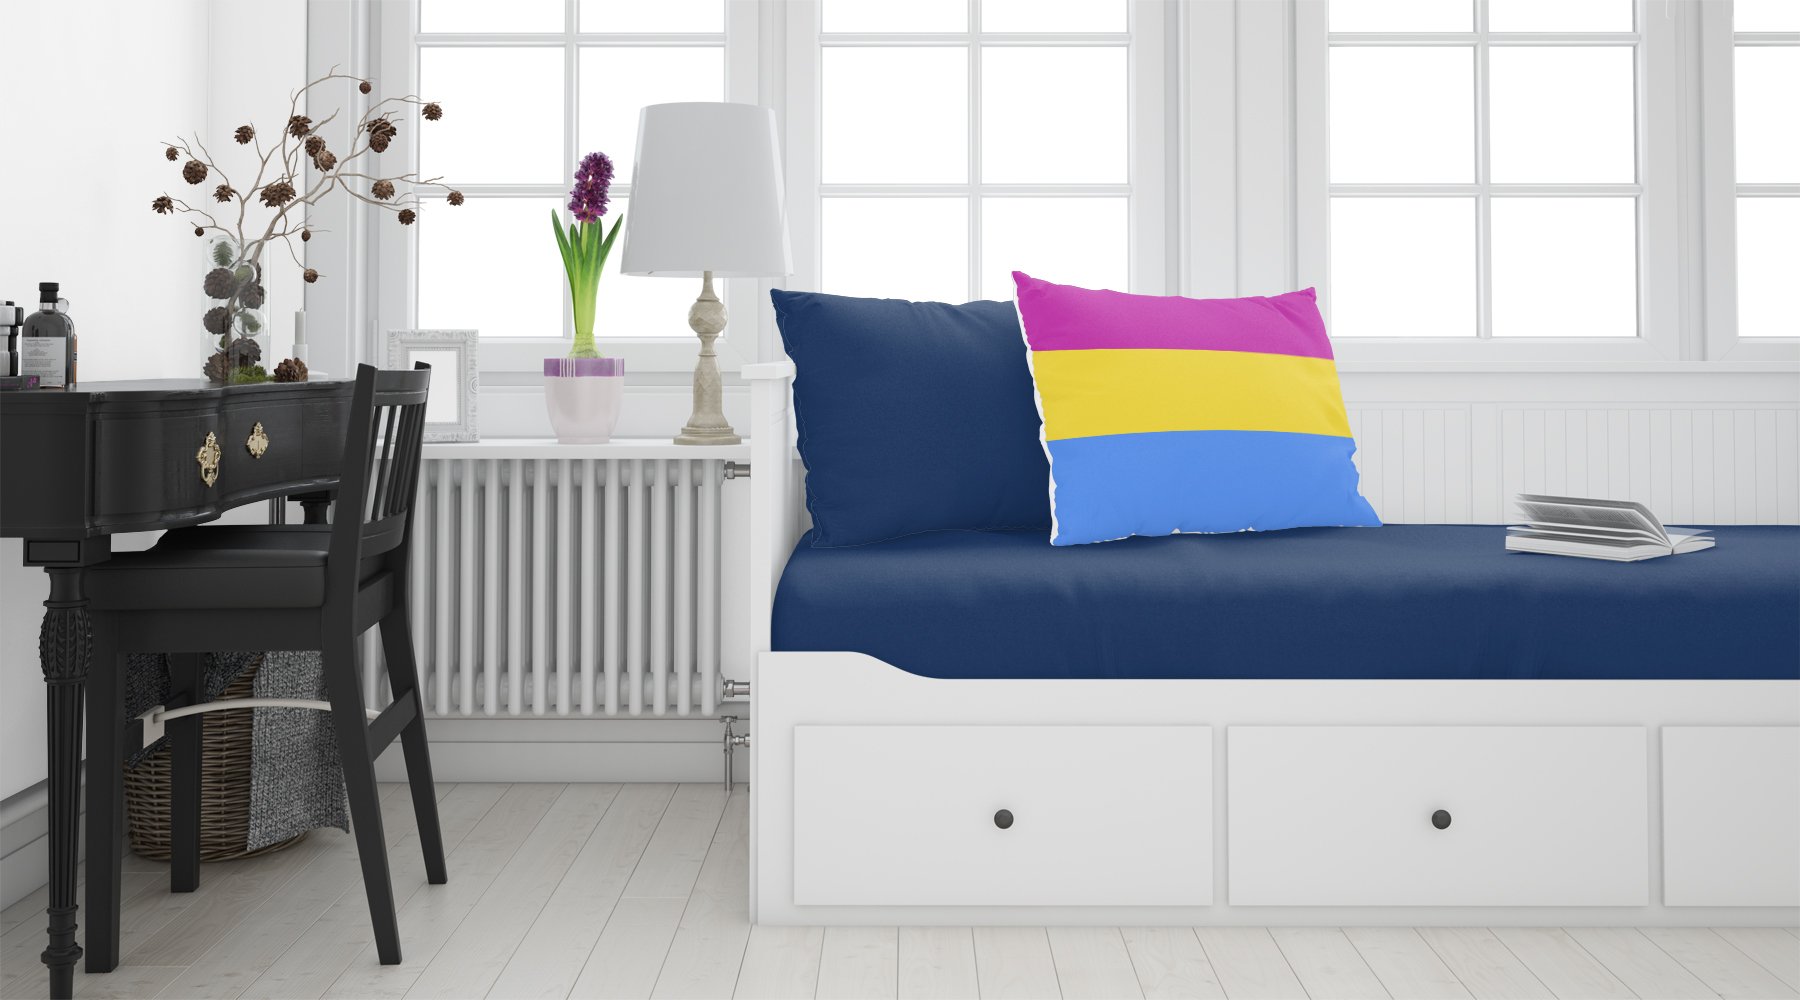 Buy this Pansexual Pride Fabric Standard Pillowcase